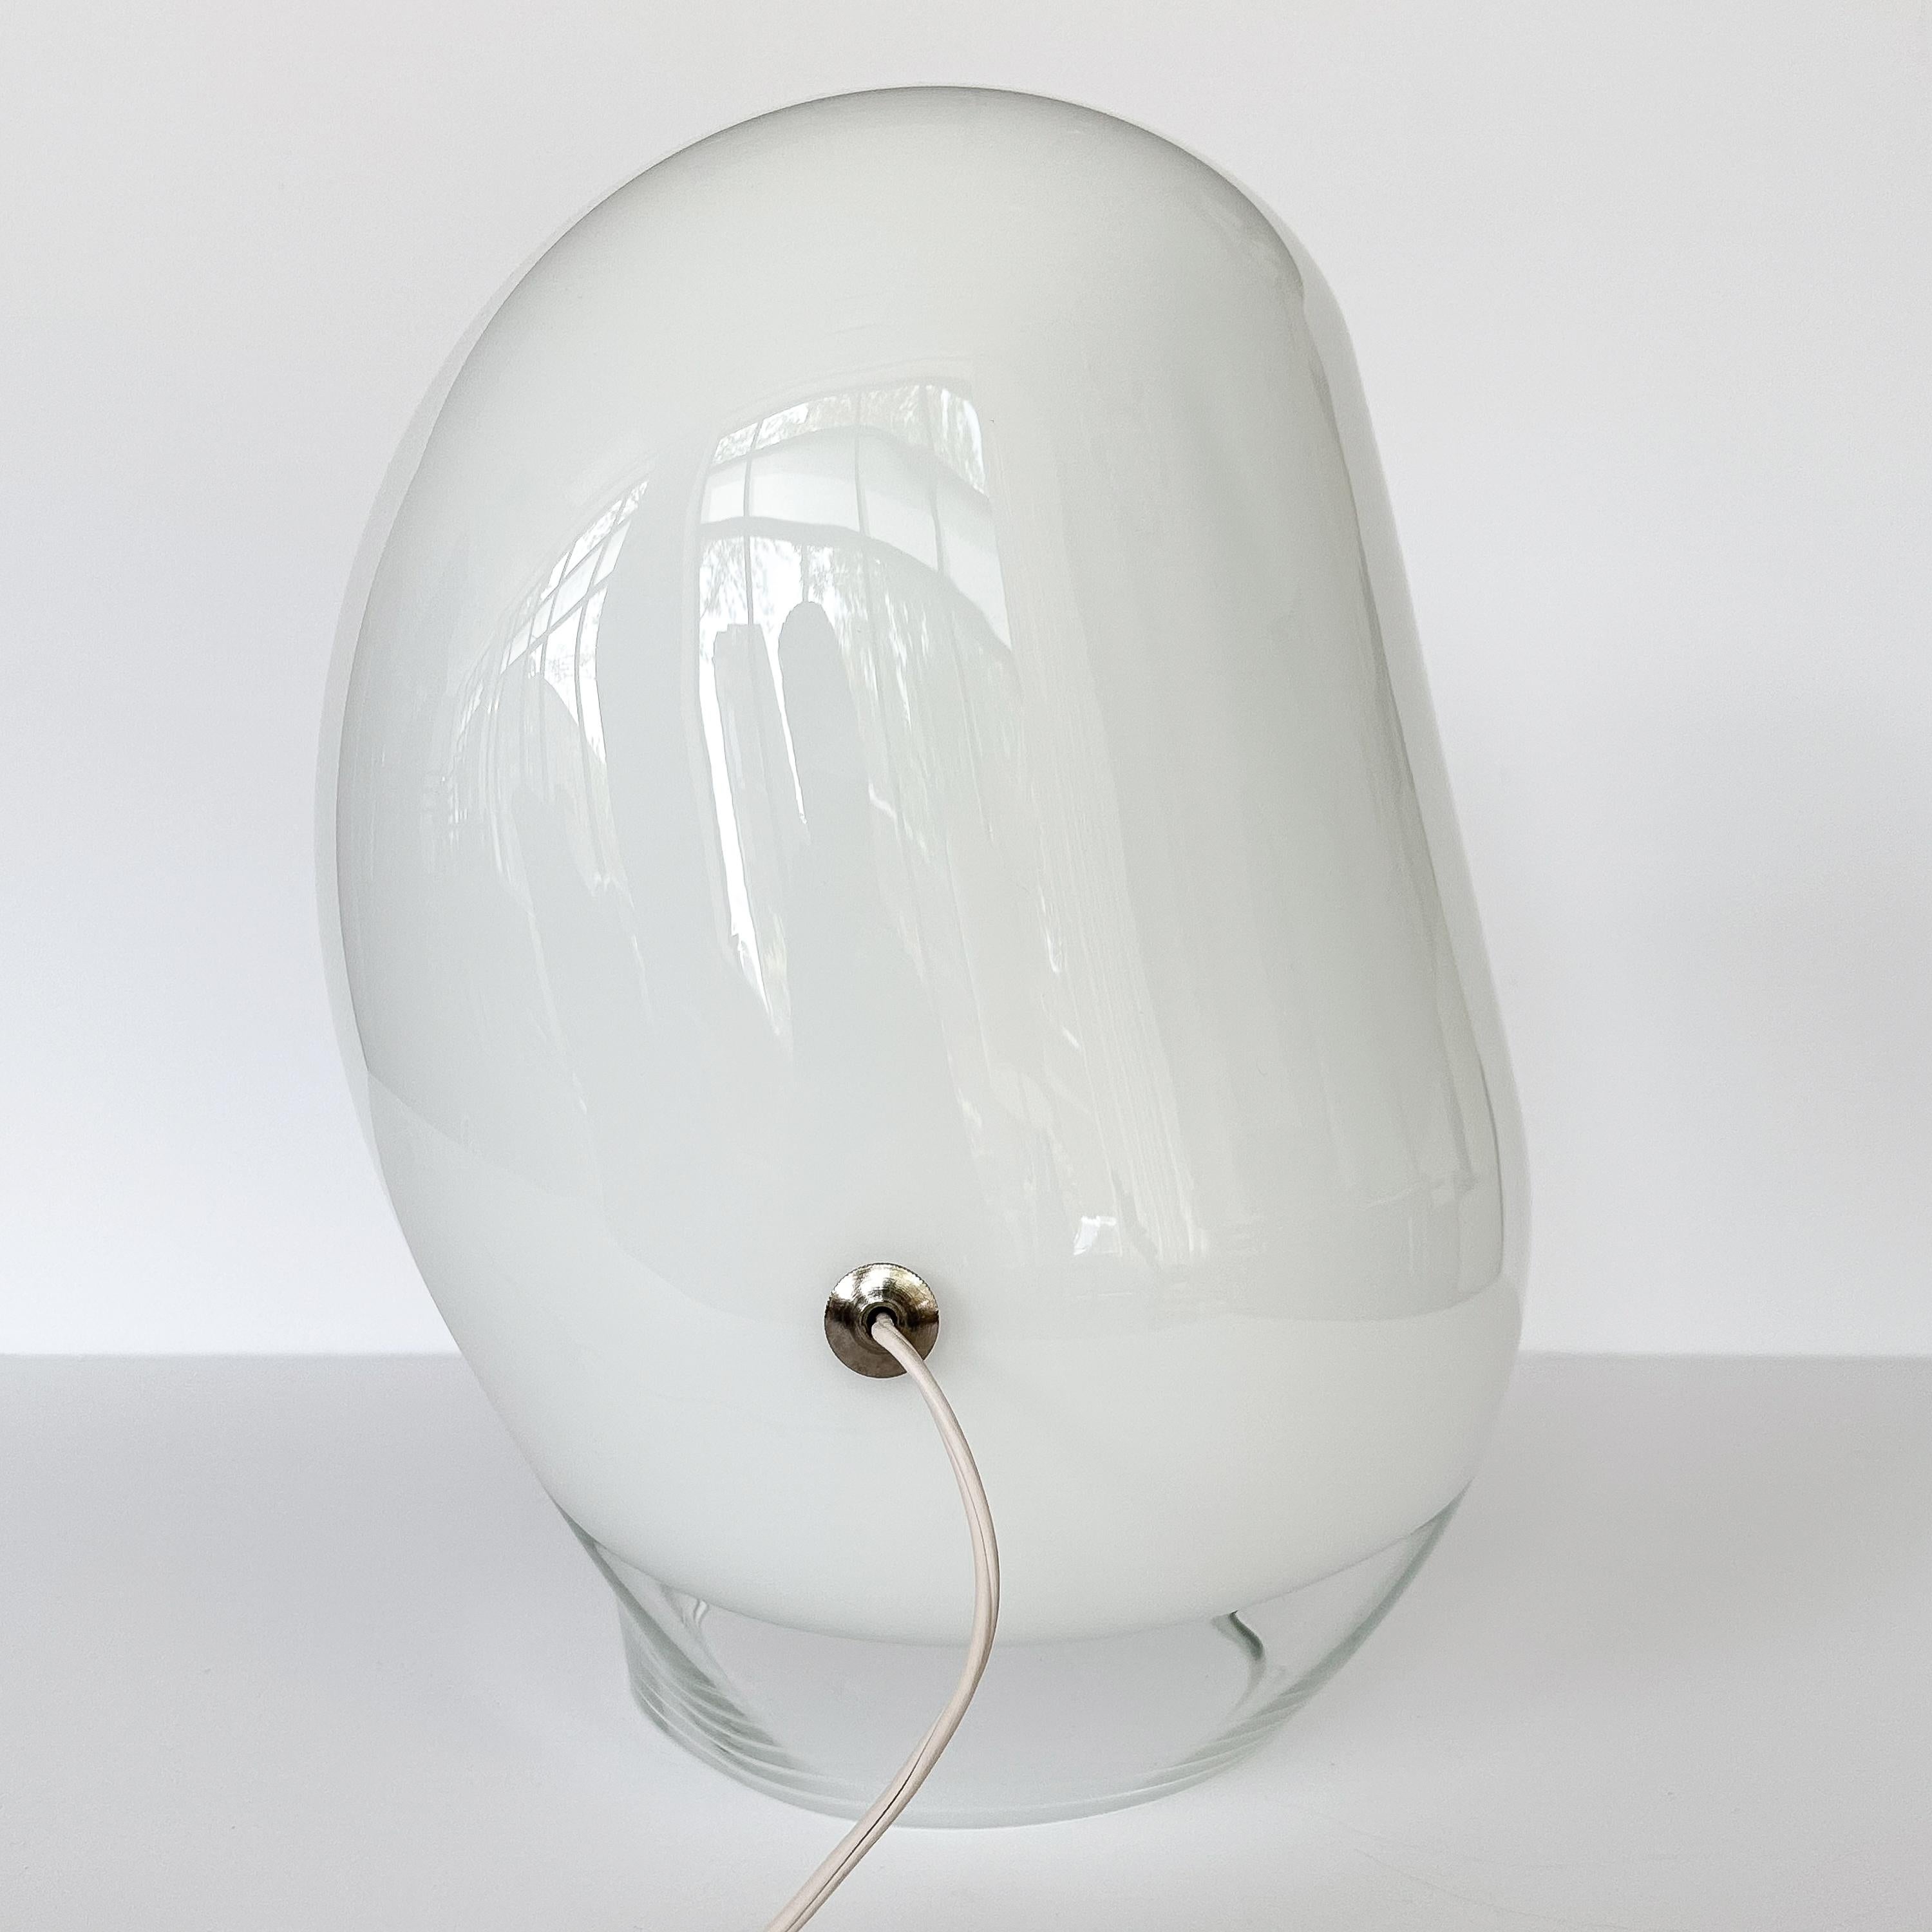 Vistosi Zago Table Lamp Model L282g by Gino Vistosi 1